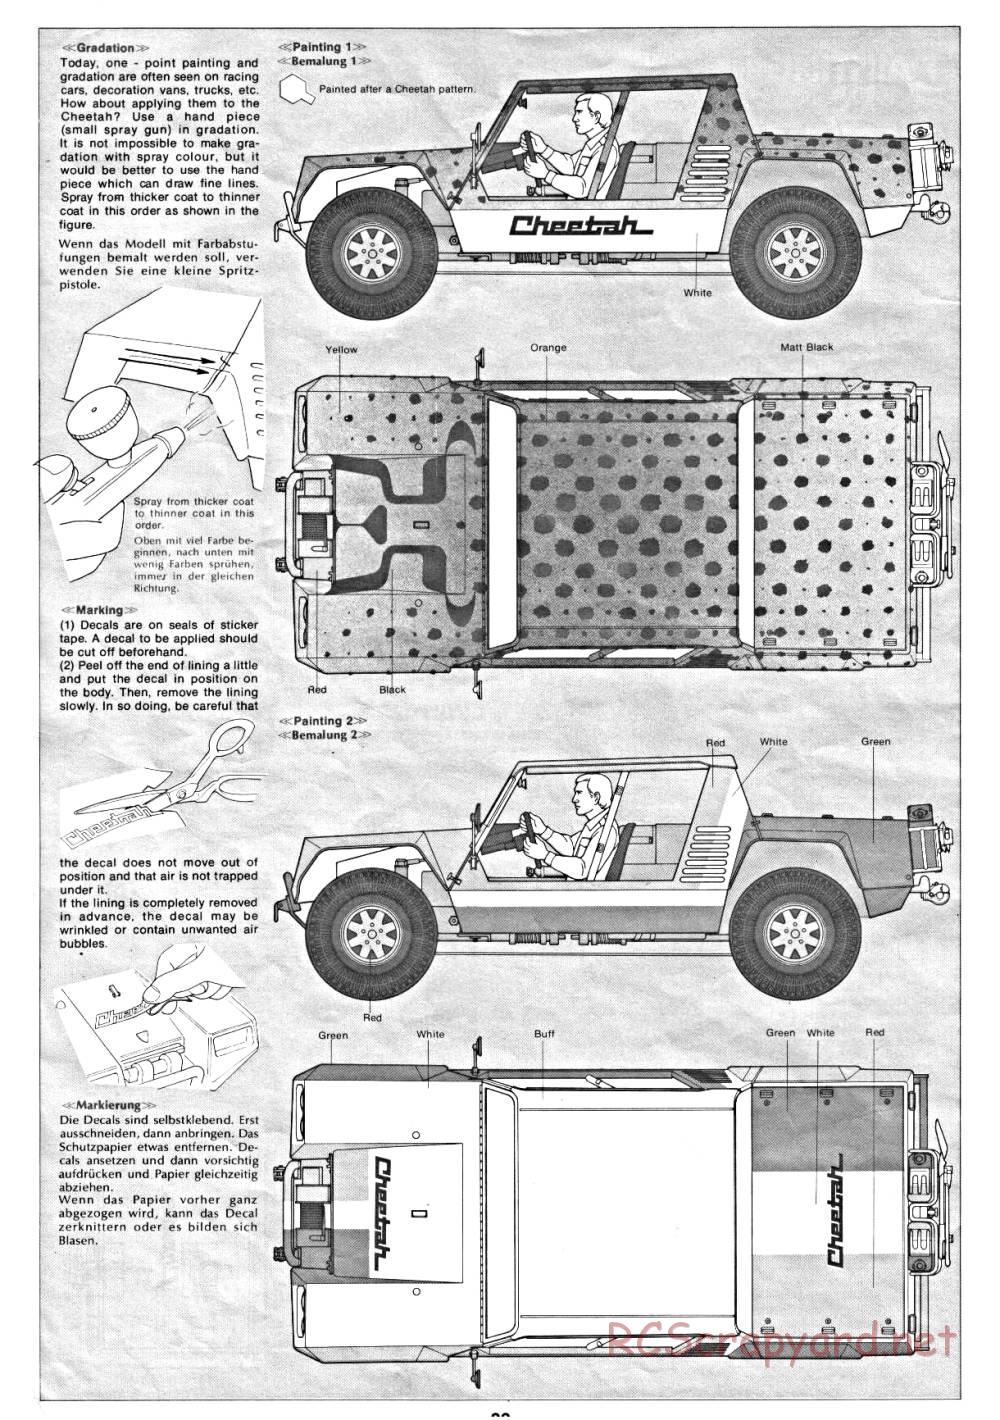 Tamiya - Lamborghini Cheetah - 58007 - Manual - Page 22